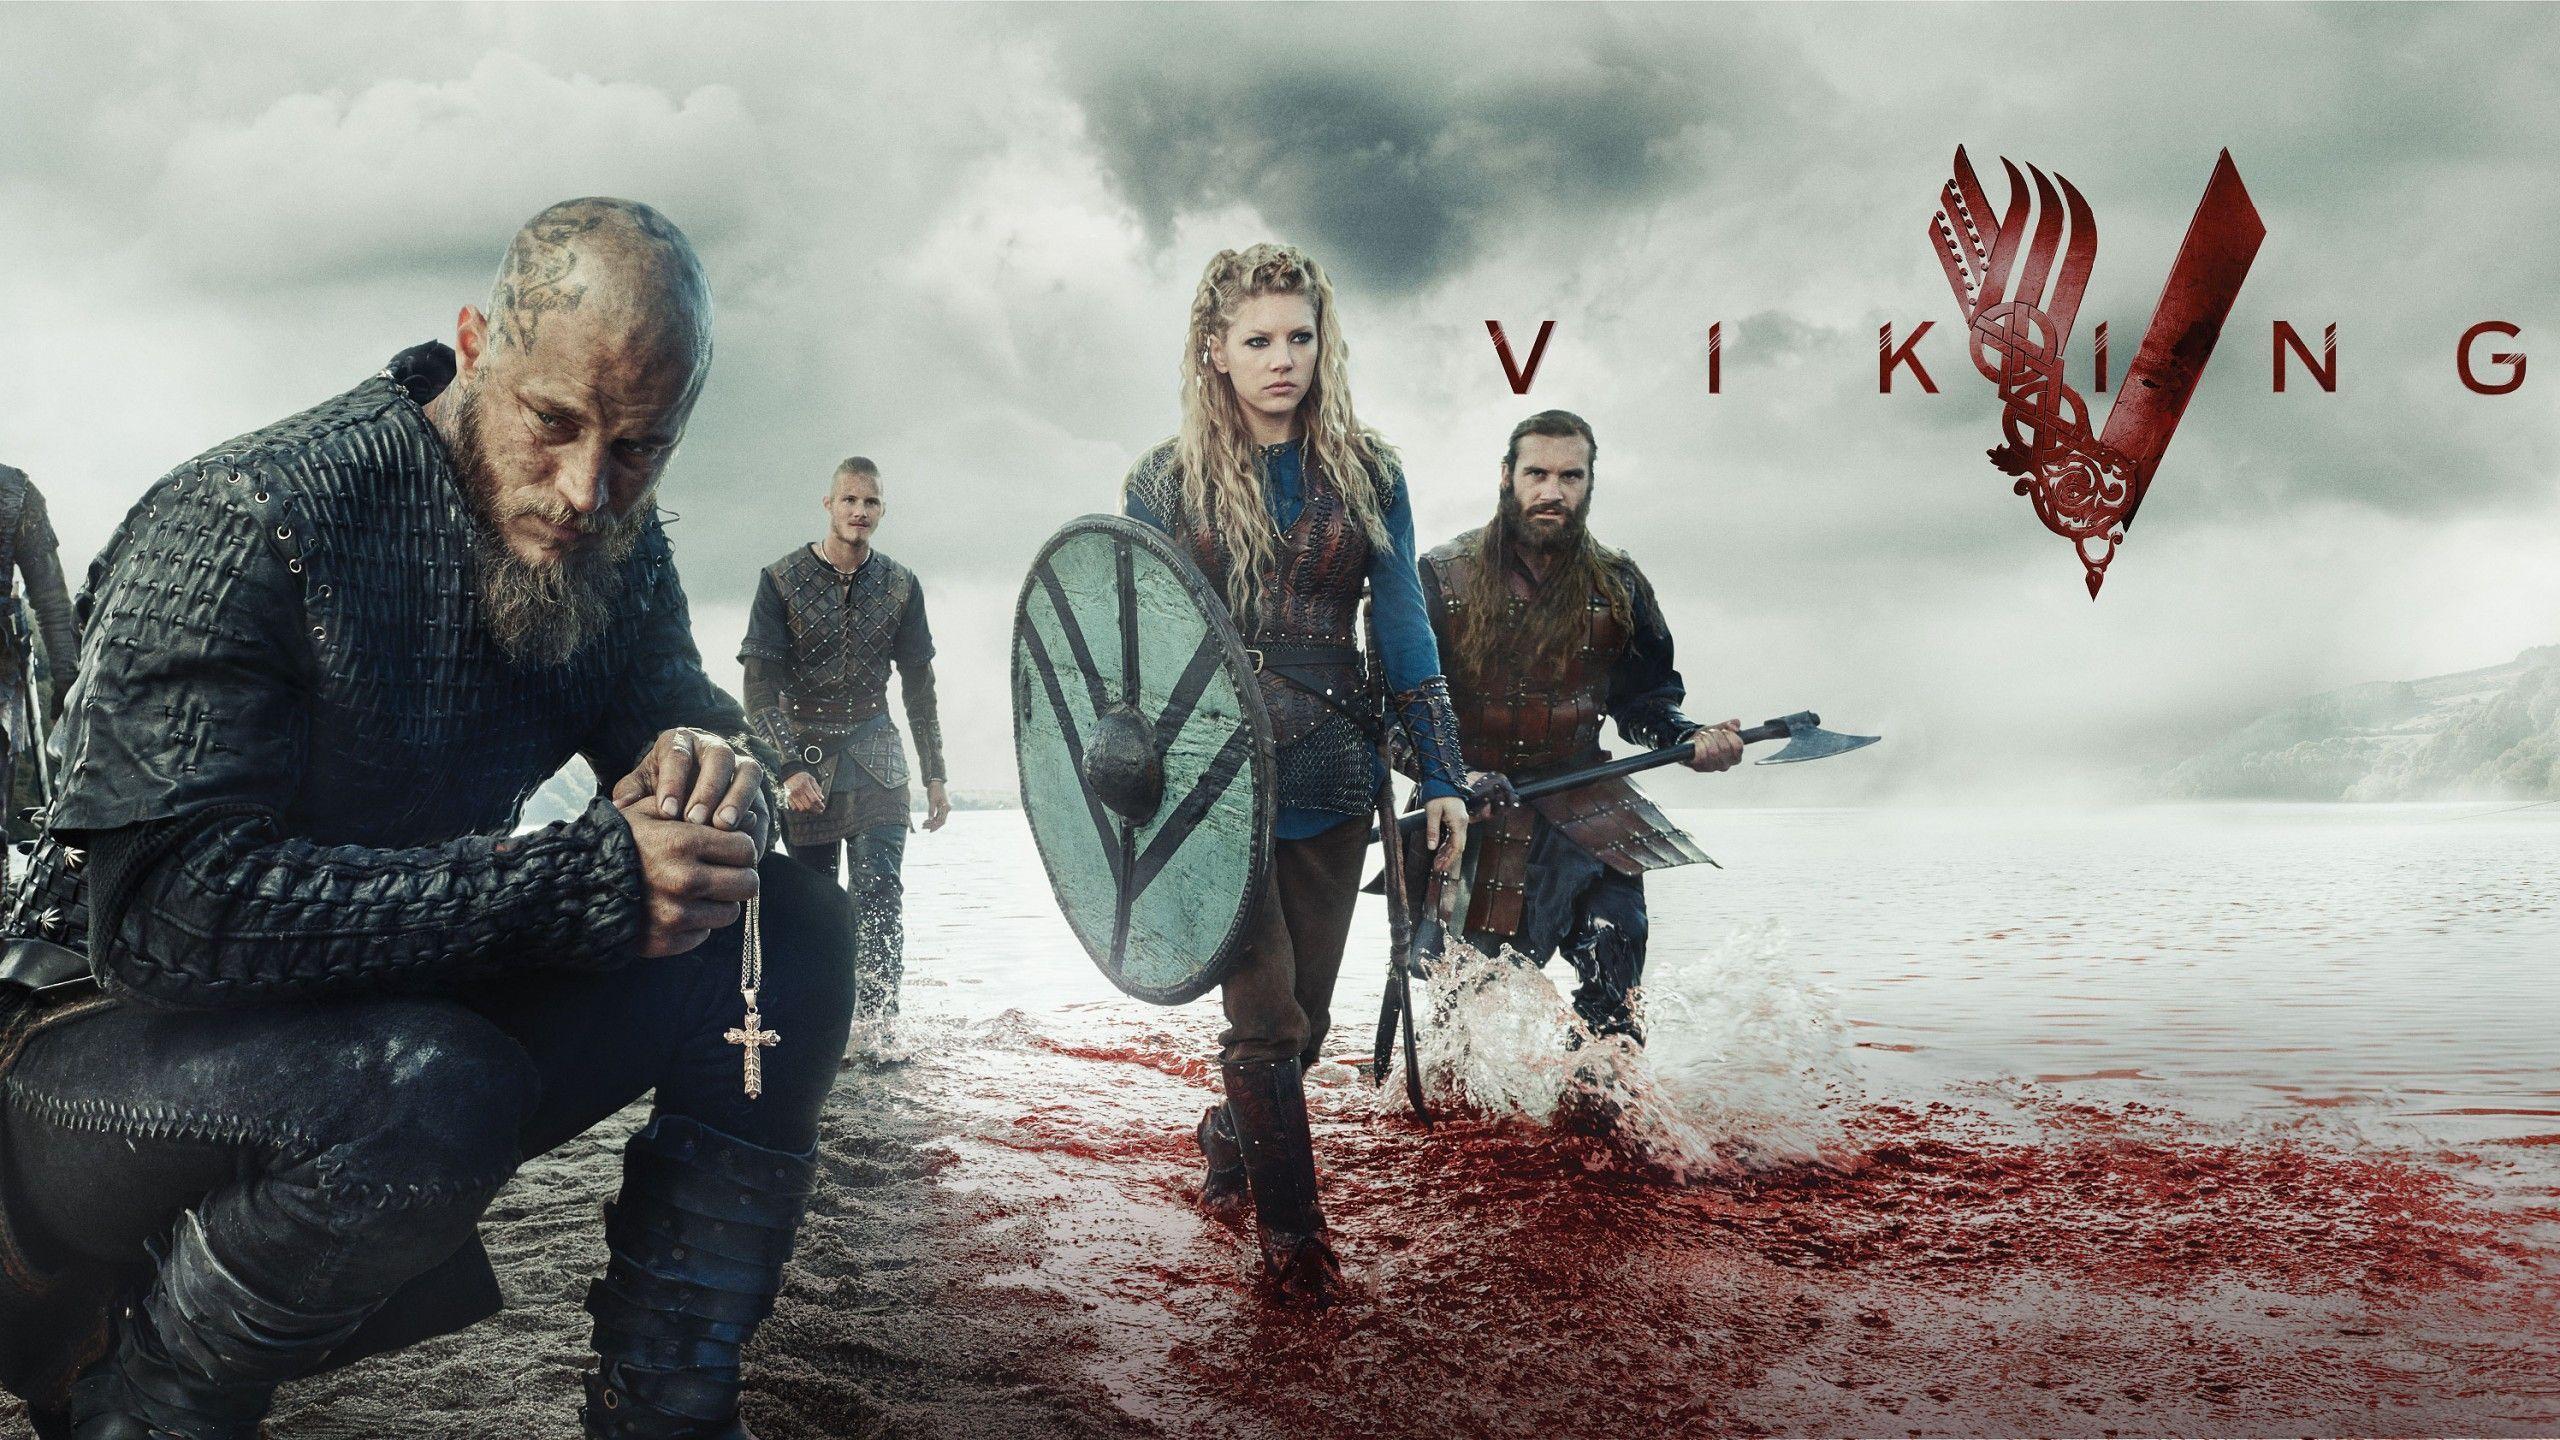 Ivar Ragnarsson  Best Viking Battle Music Of All Time  Most Powerful  Viking Music  YouTube